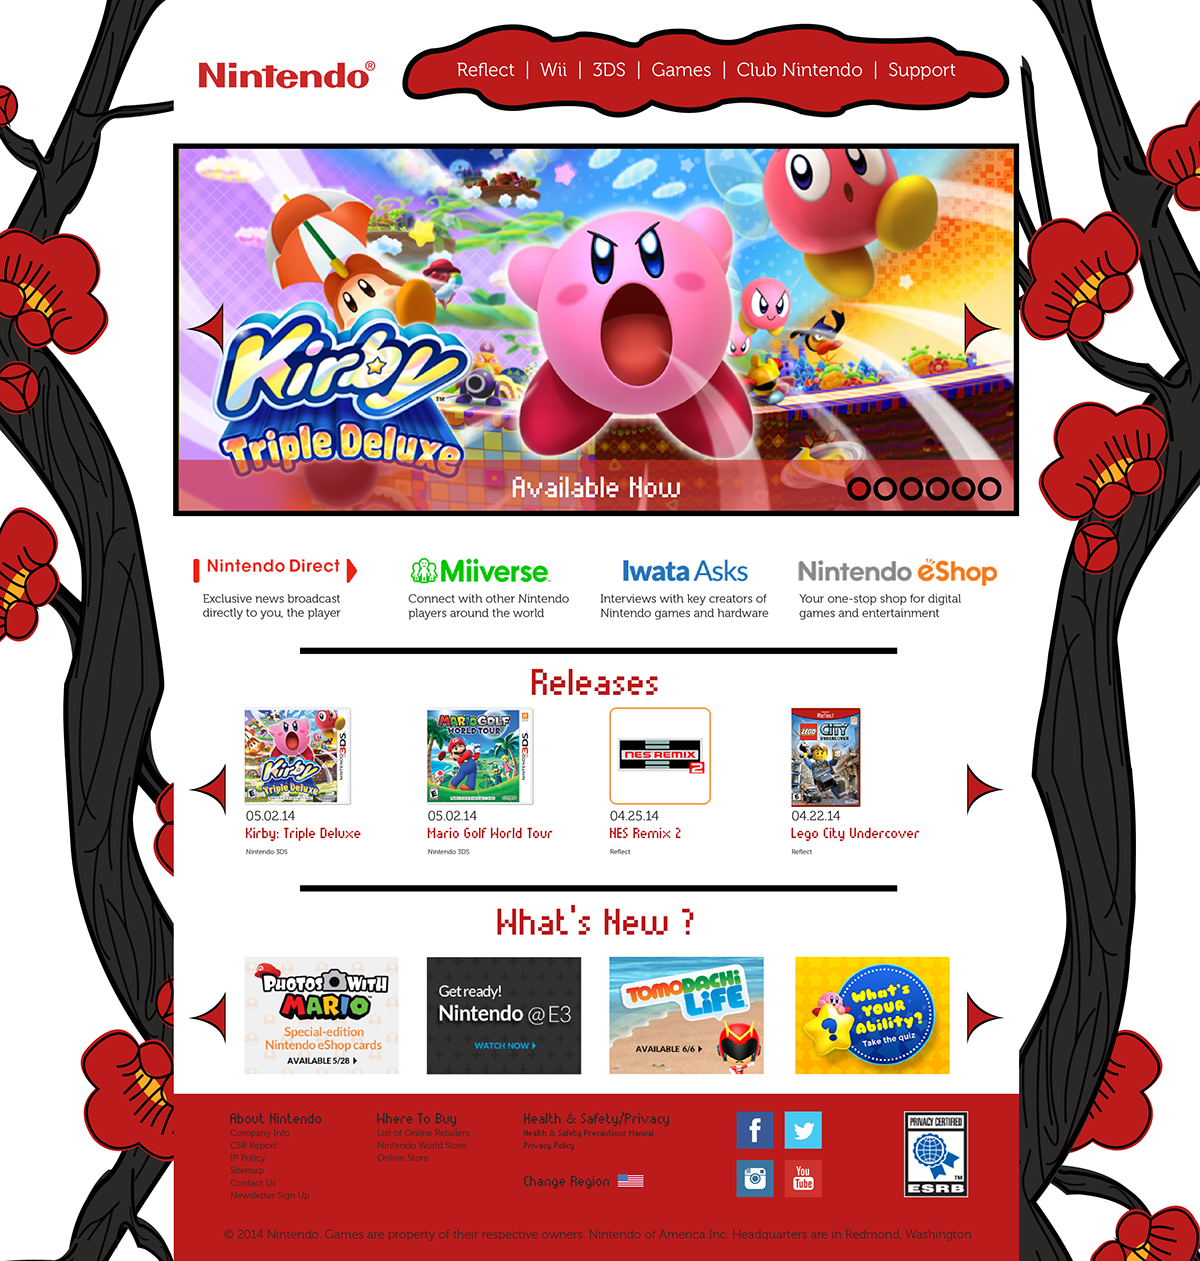 Nintendo rebranding campaign Video Games Repositioning Gaming Games consoles console Pokemon wii nostalgia Hanafuda woodblock print japanese